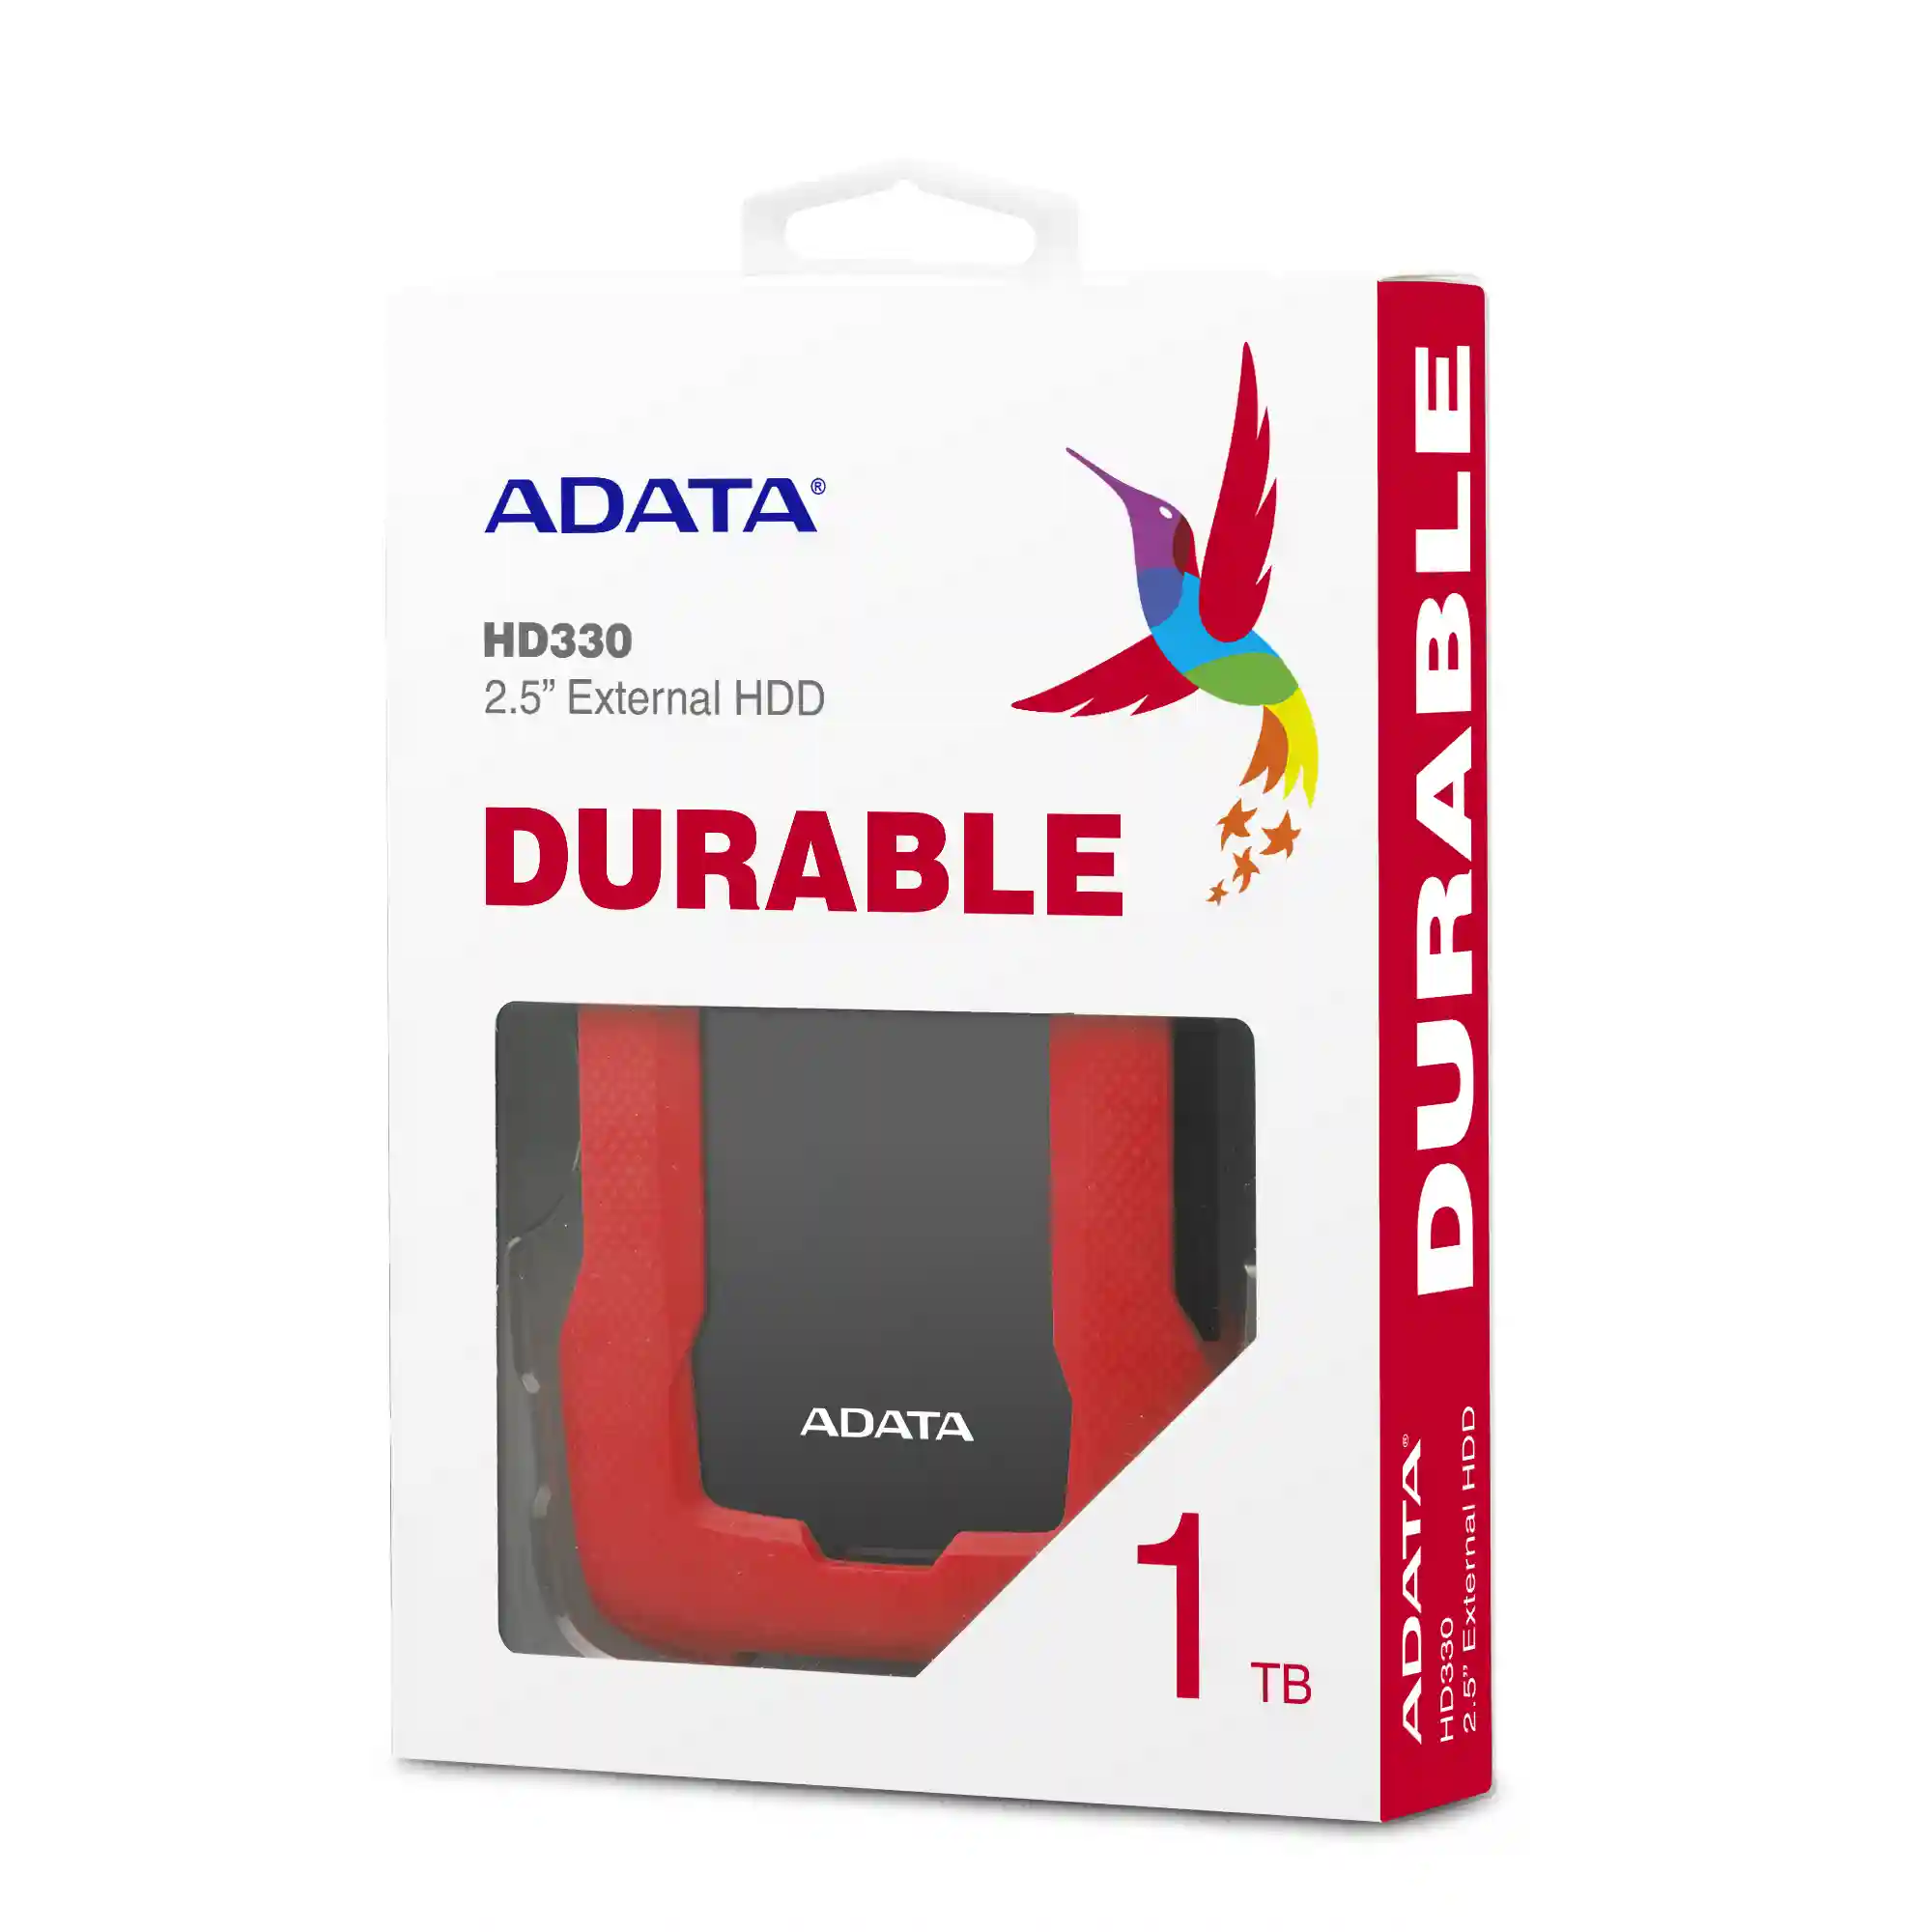 Внешний HDD диск ADATA DashDrive HD330 1TB Red (AHD330-1TU31-CRD)